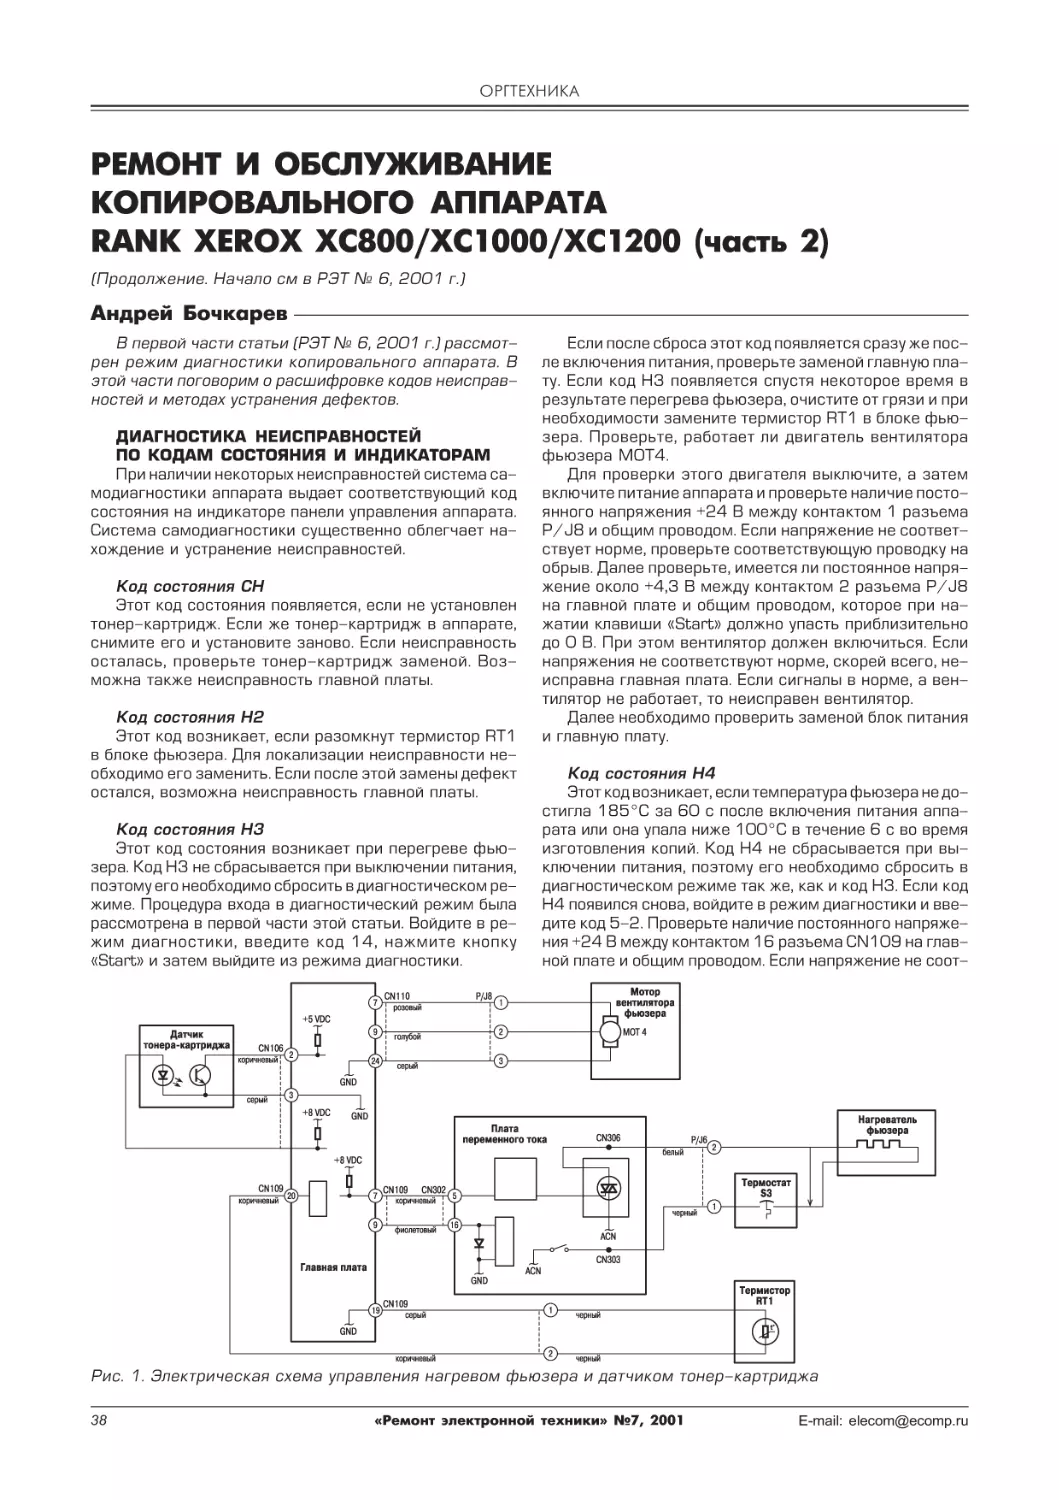 ОРГТЕХНИКА
Ремонт и обслуживание копировального аппарата Rank Xerox XC800/XC1000/XC1200 (часть 2)